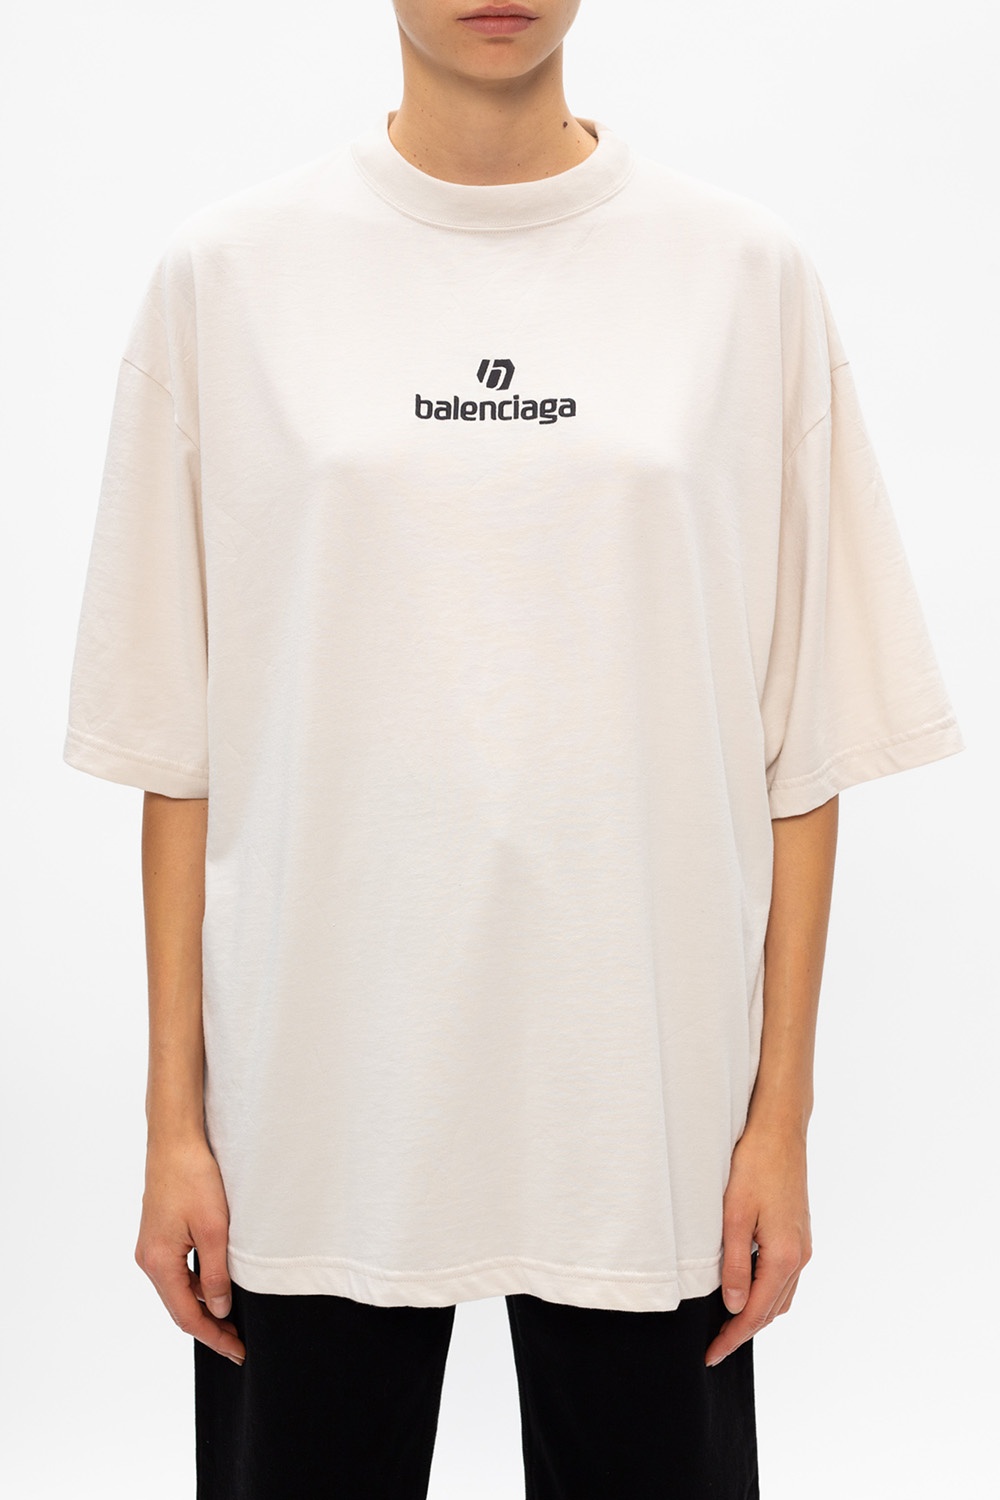 Kommerciel Nathaniel Ward kat Oversize T-shirt Balenciaga - Vitkac US